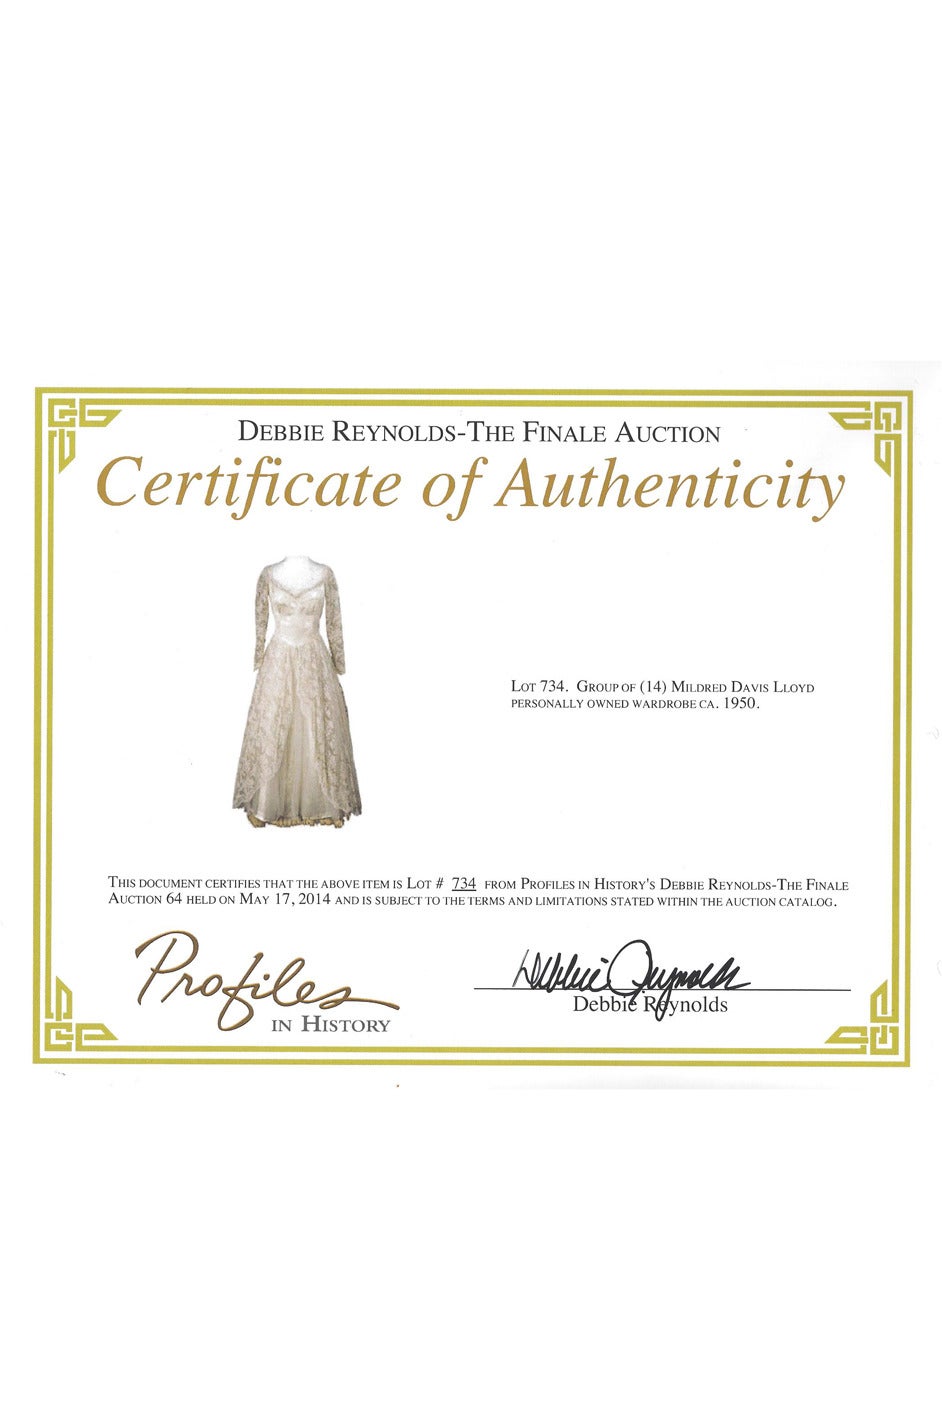 1950s Mildred Davis Lloyd Owned I. Magnin Lace Dress 4